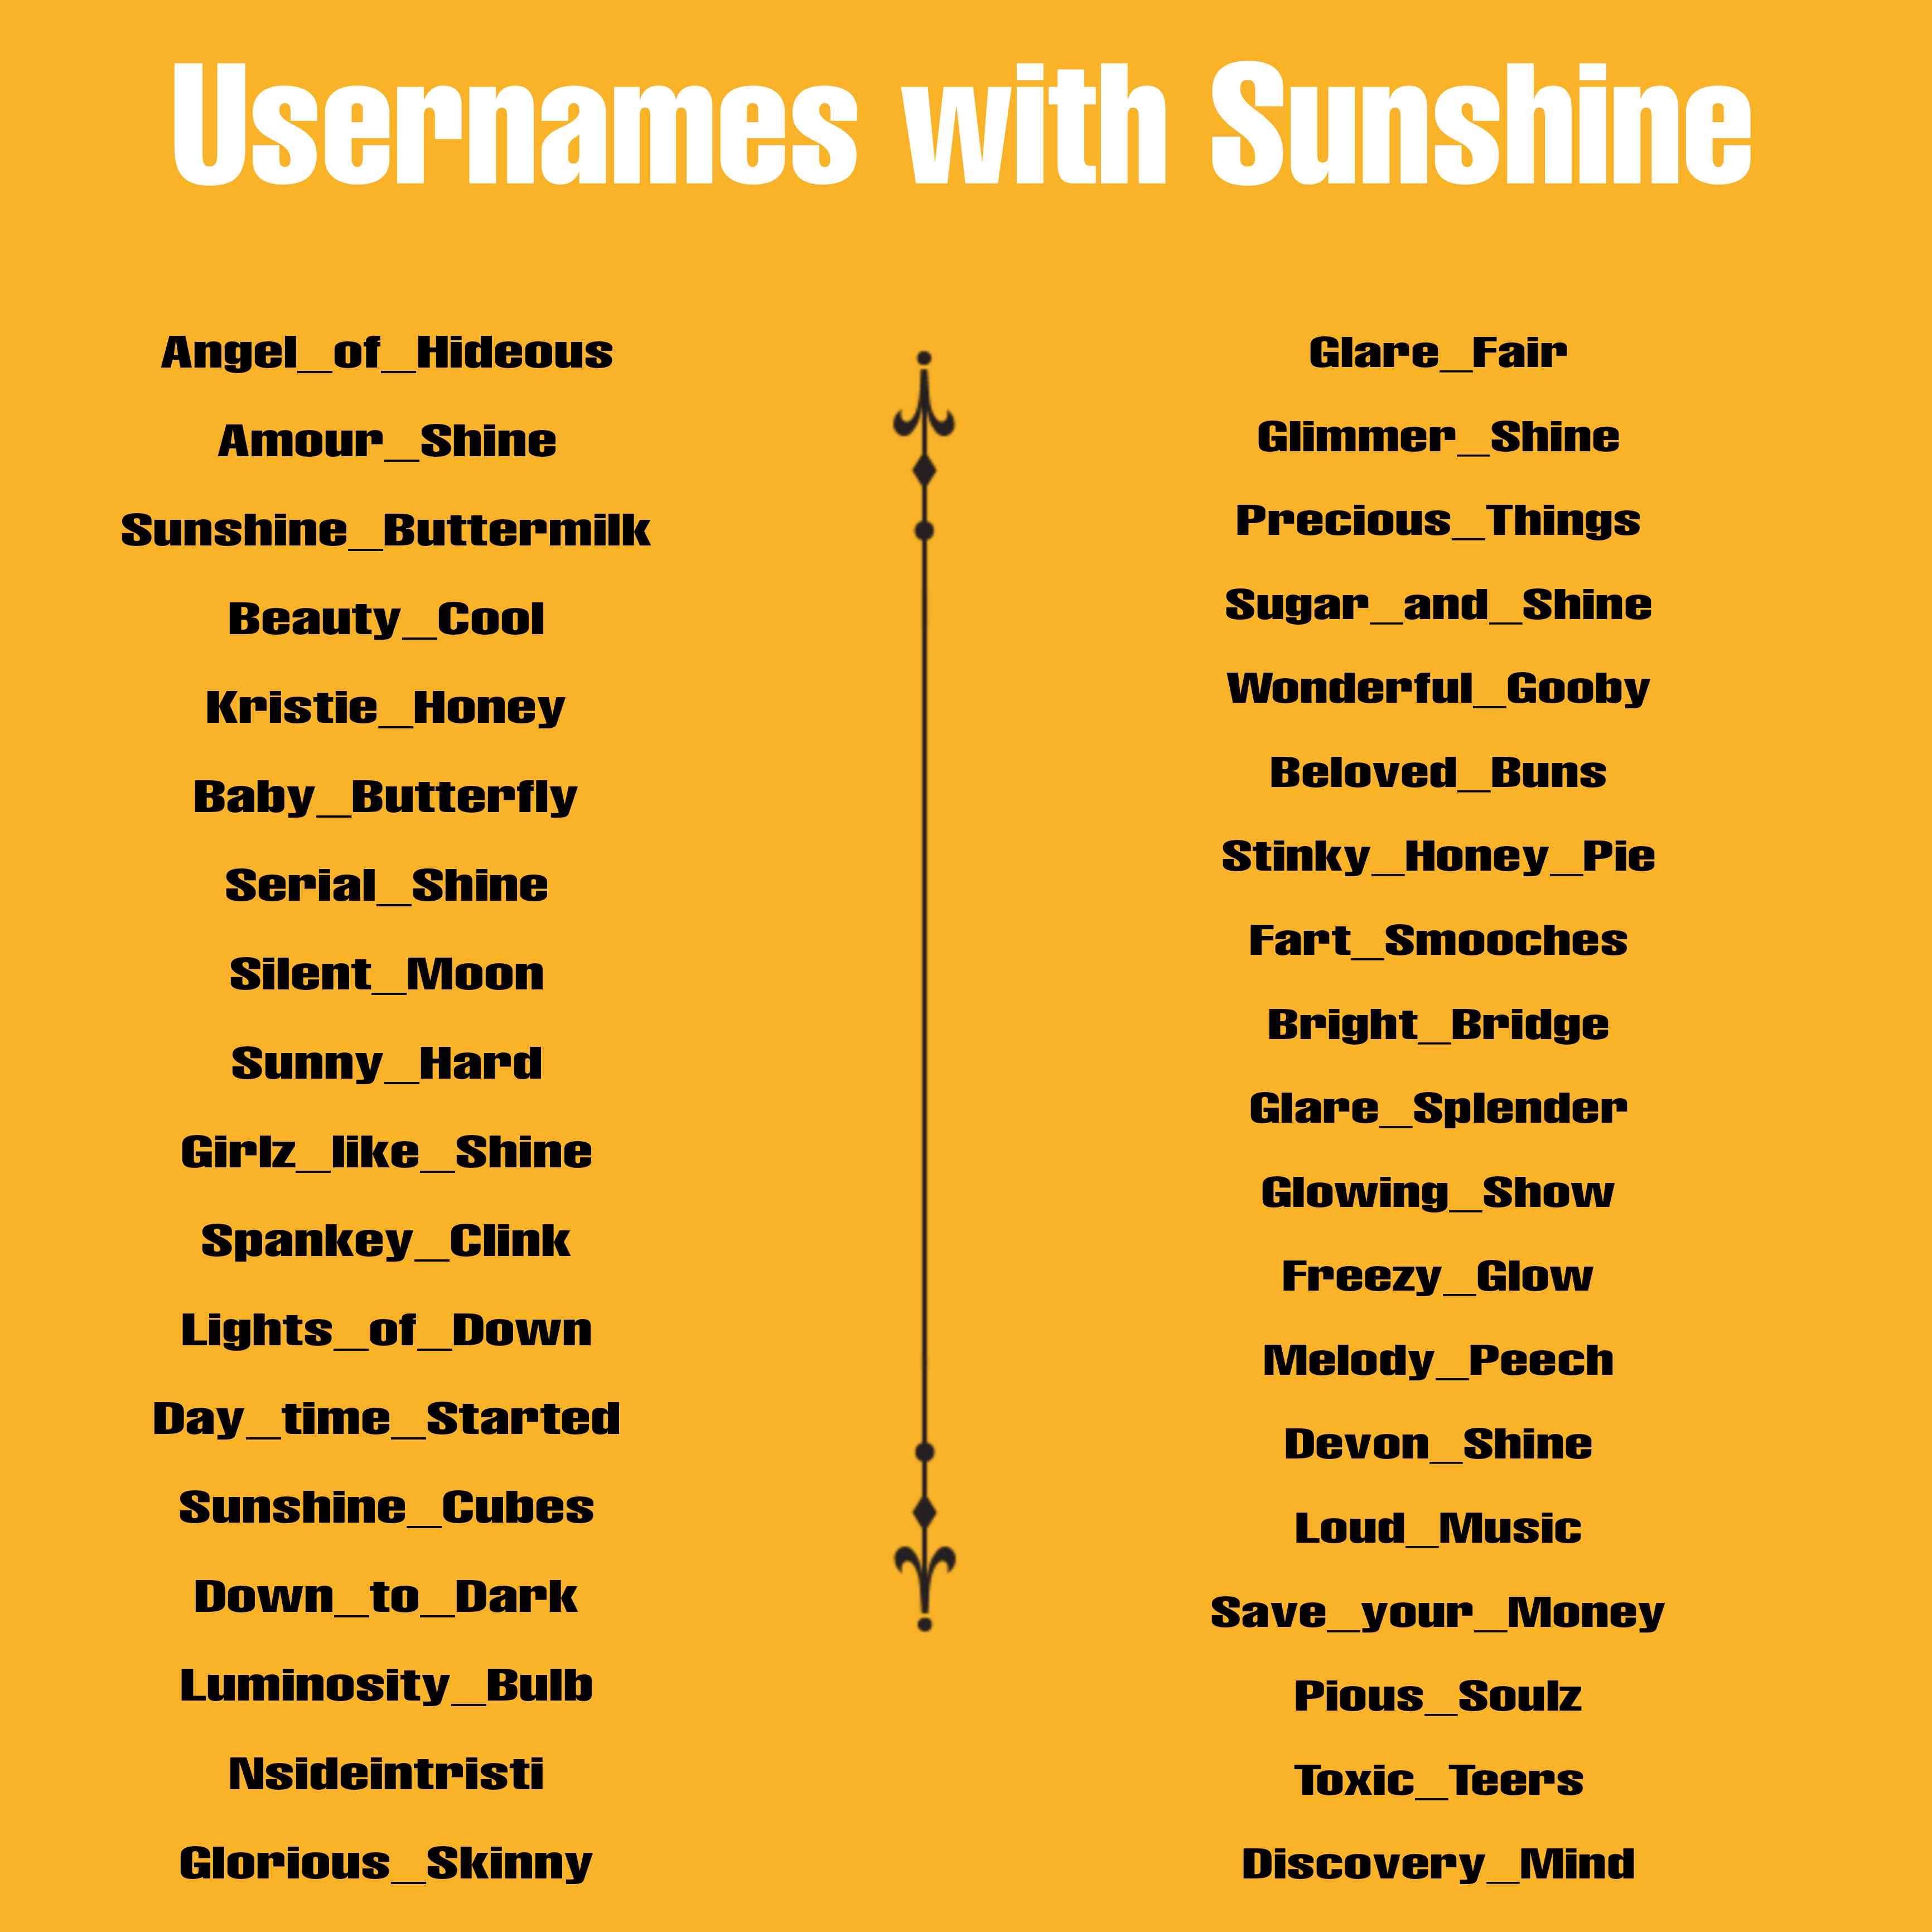 Usernames with Sunshine